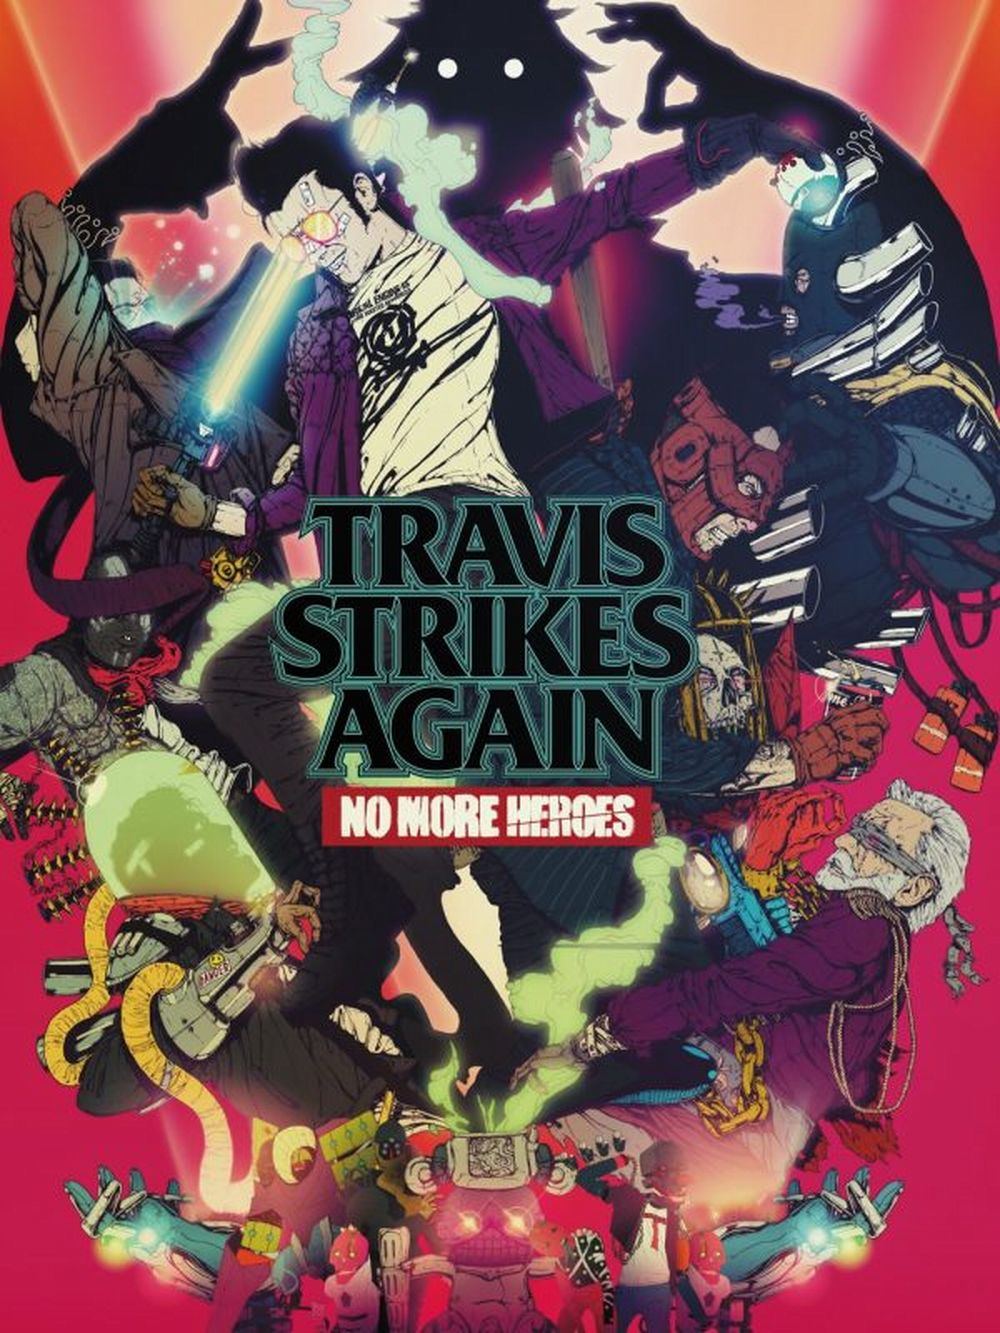 NMH-Travis-Strikes-Back_11-05-18-600x800.jpg